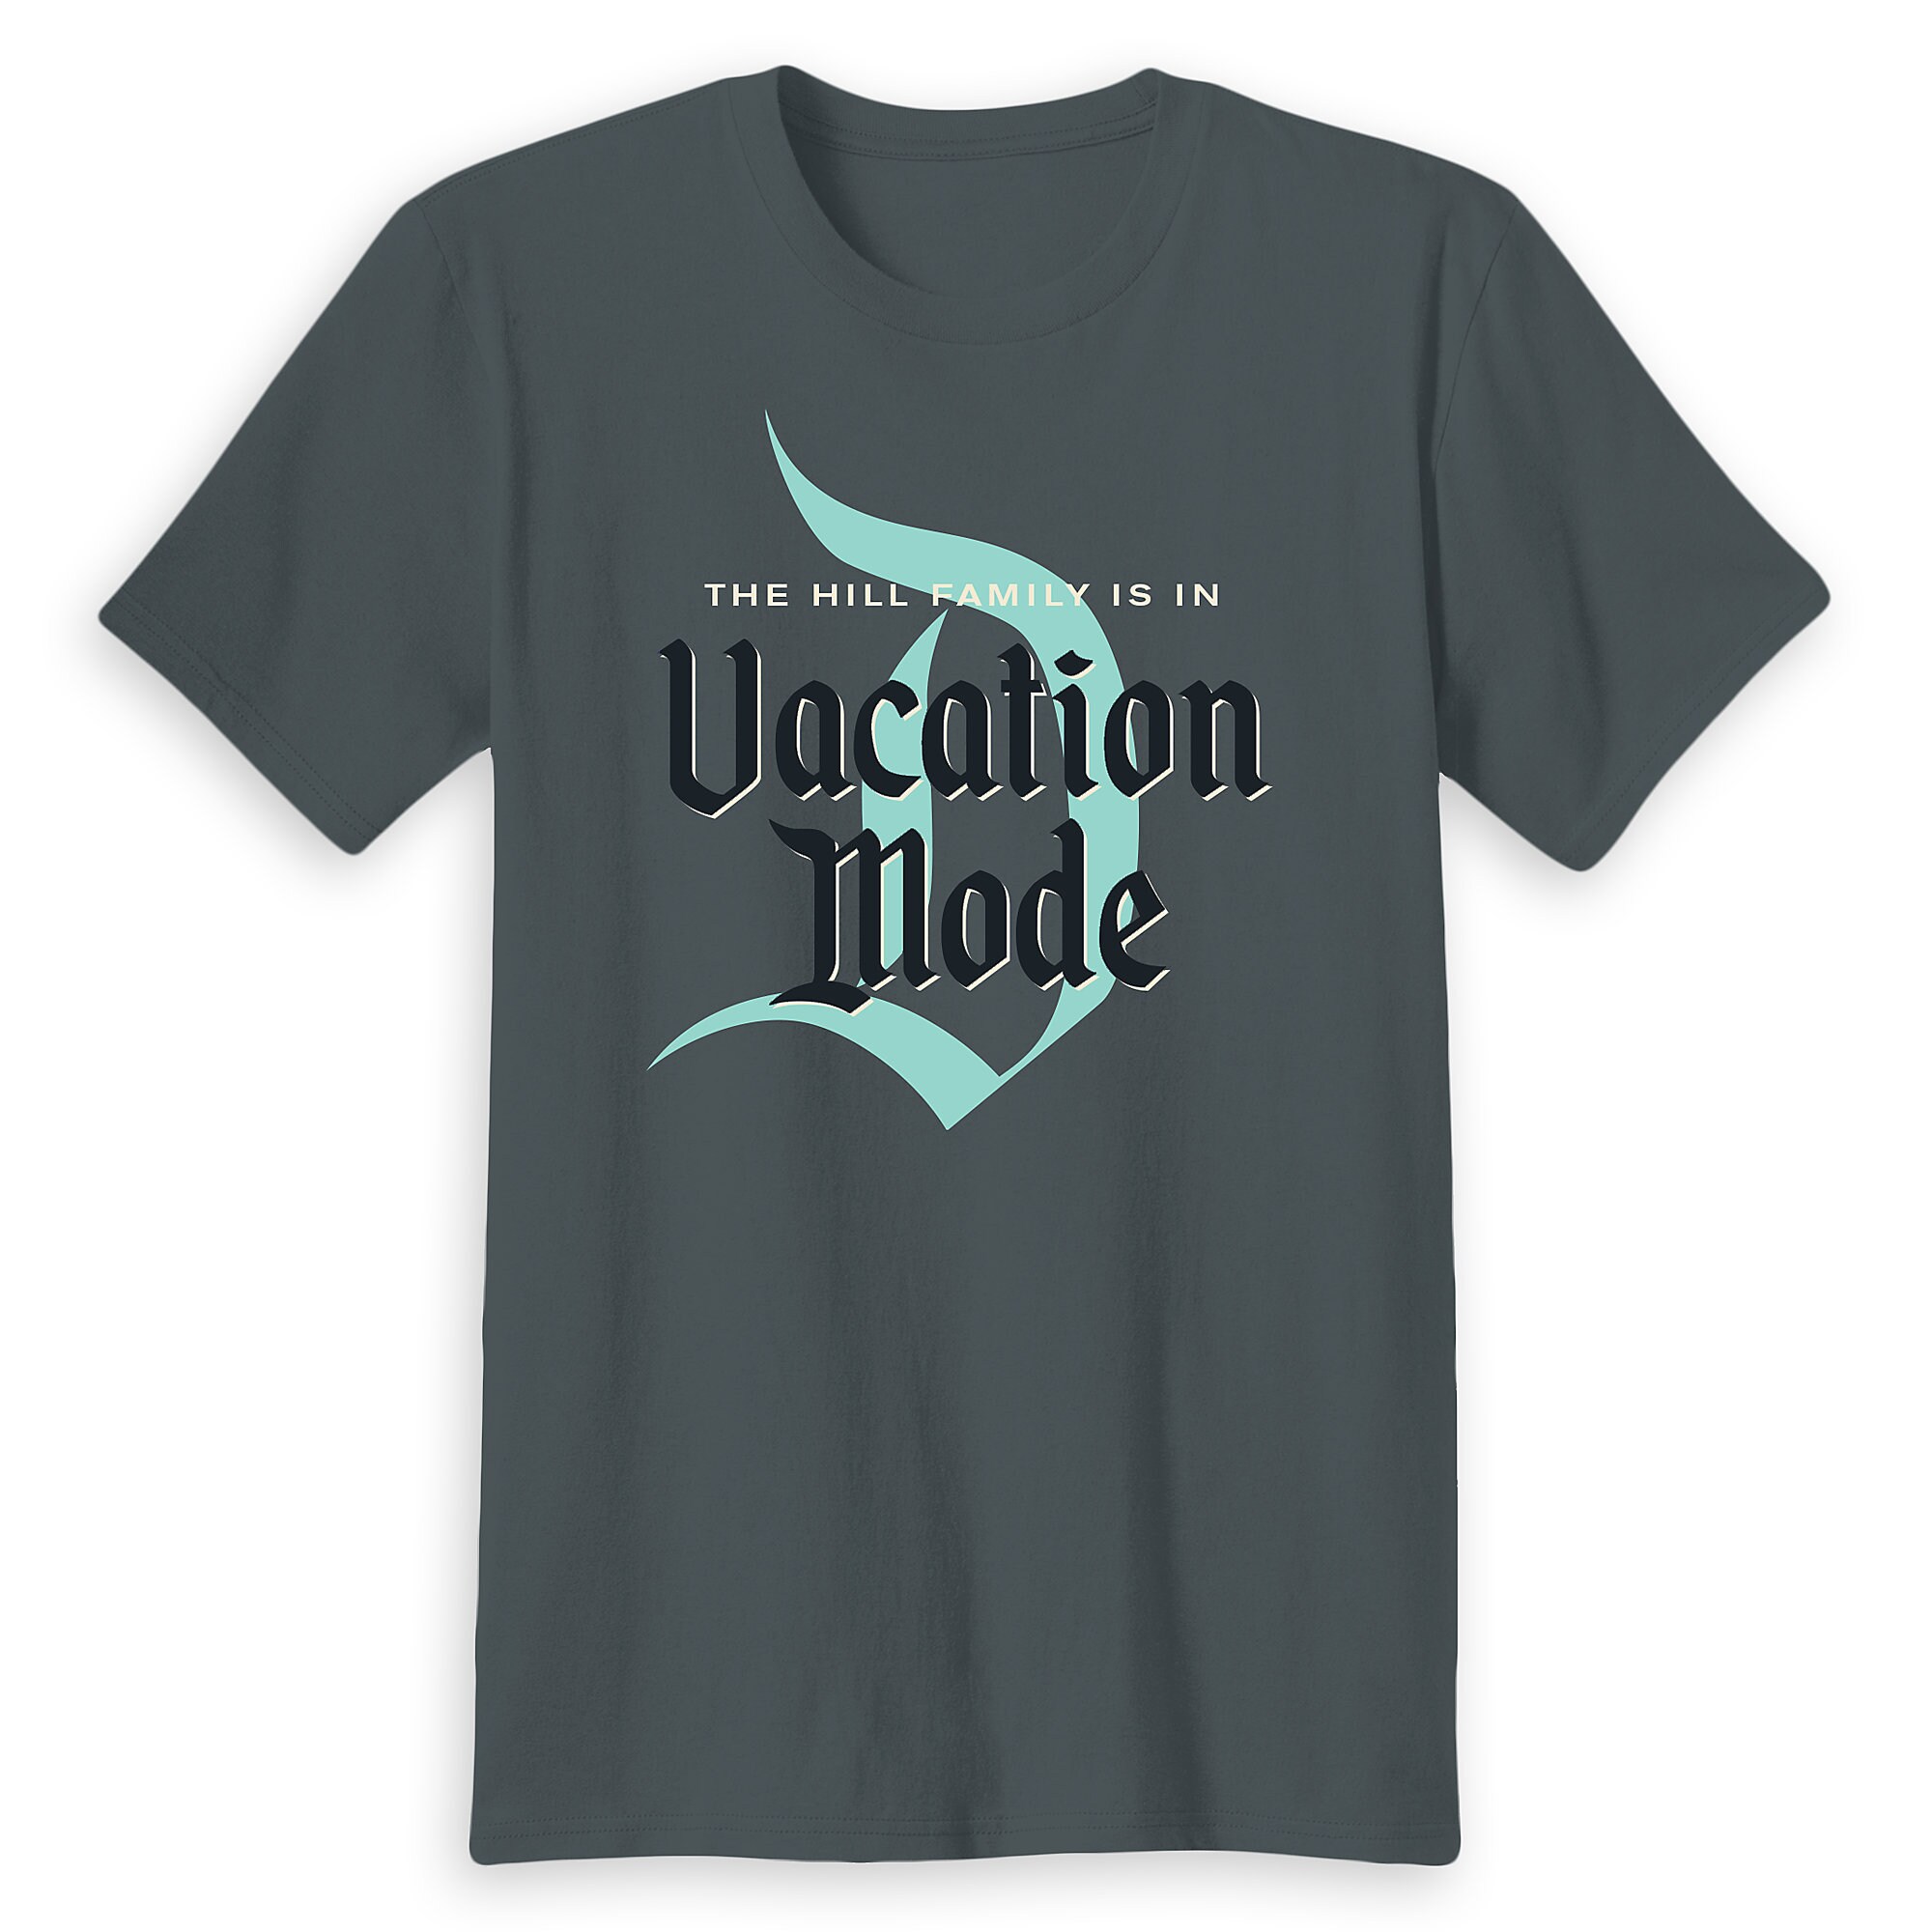 Adults' Disneyland Family Vacation Mode T-Shirt- Customized